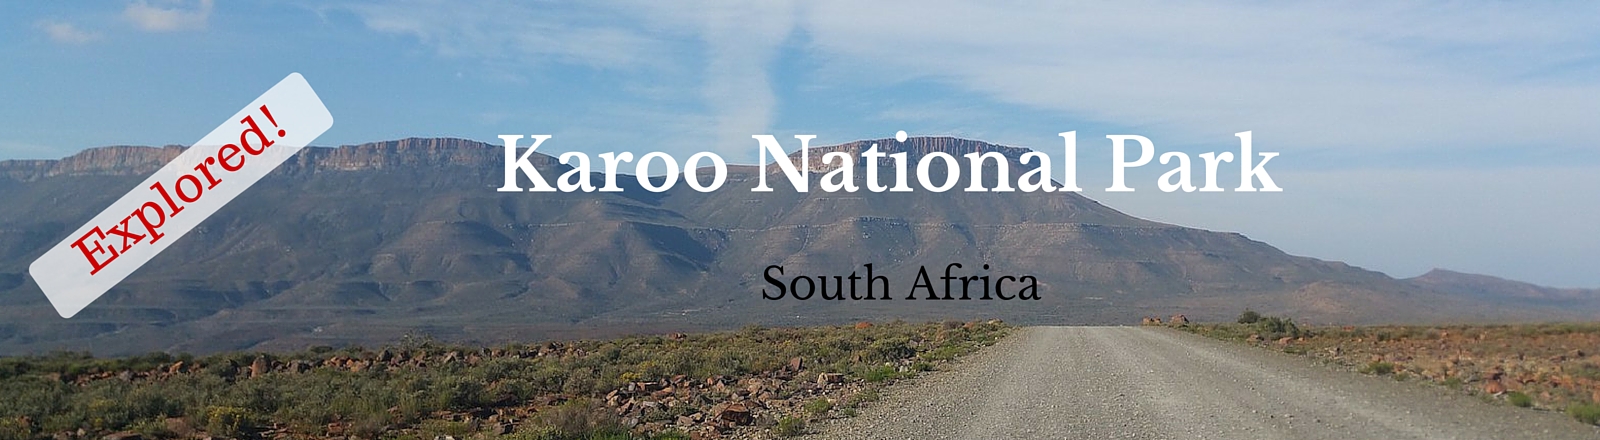 National Parks Guy, Exploring the Karoo National Park